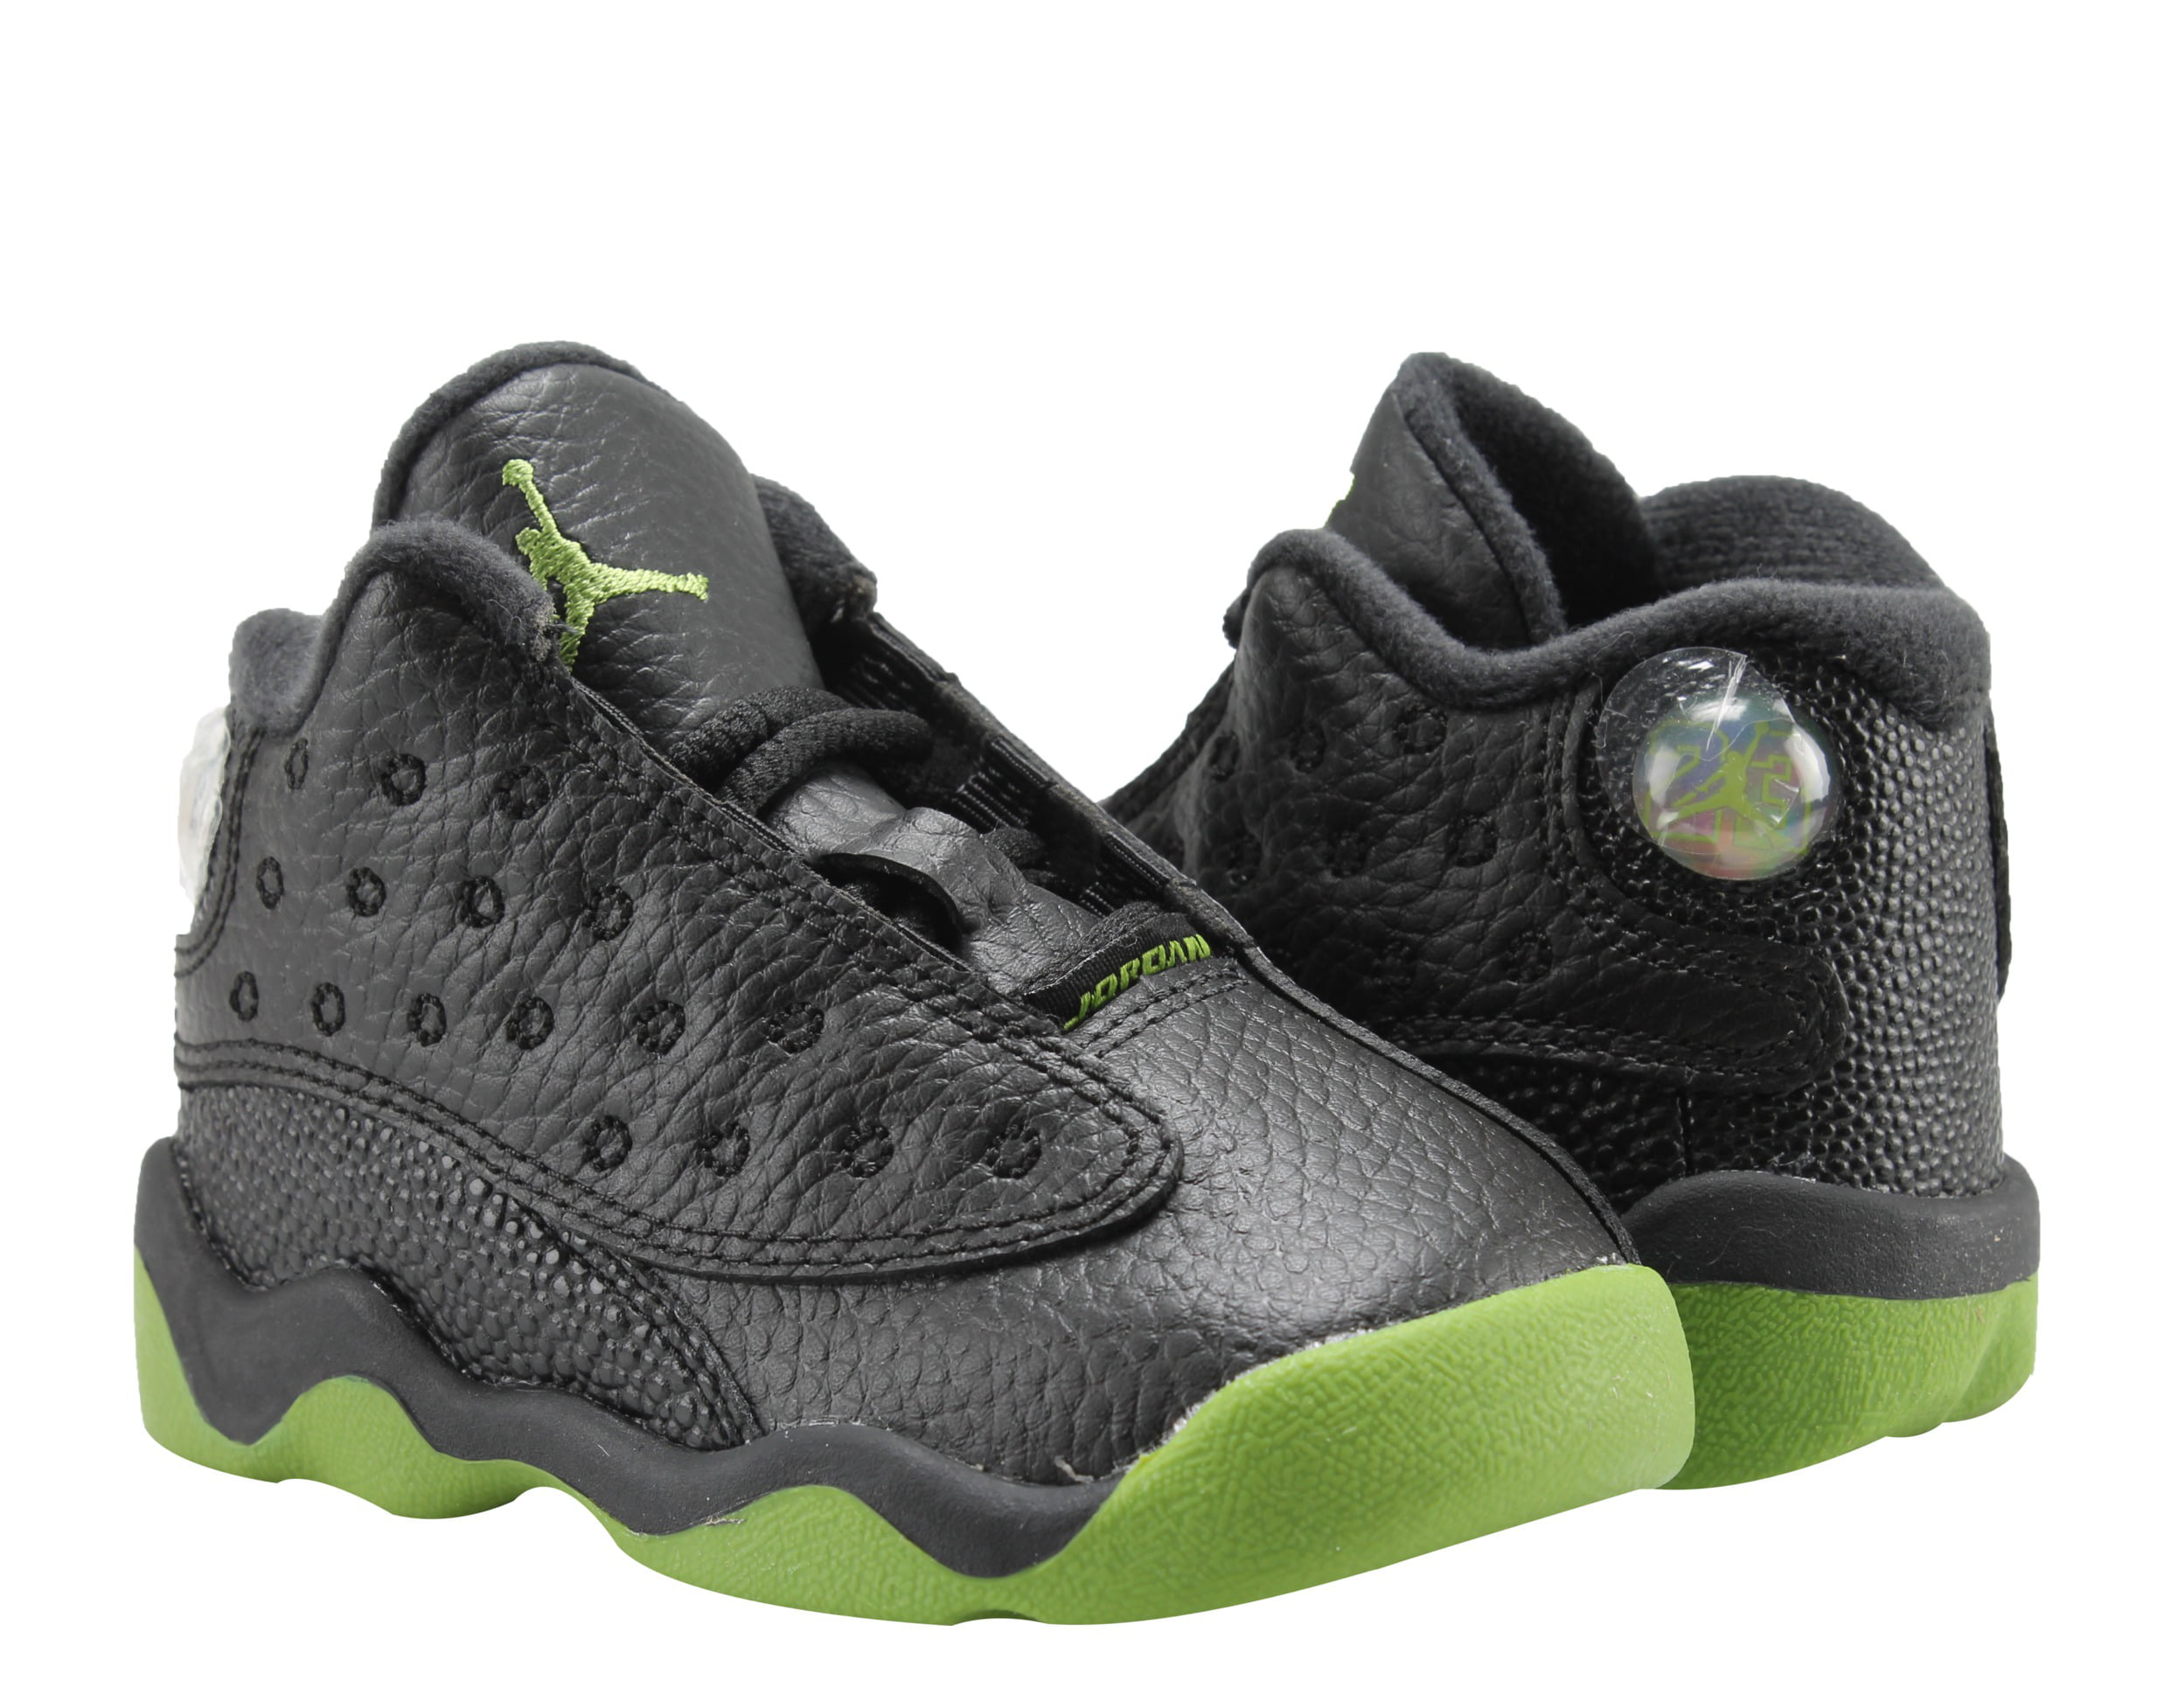 Air Jordan 13 Retro 'Black Cat' Shoes - Size 10